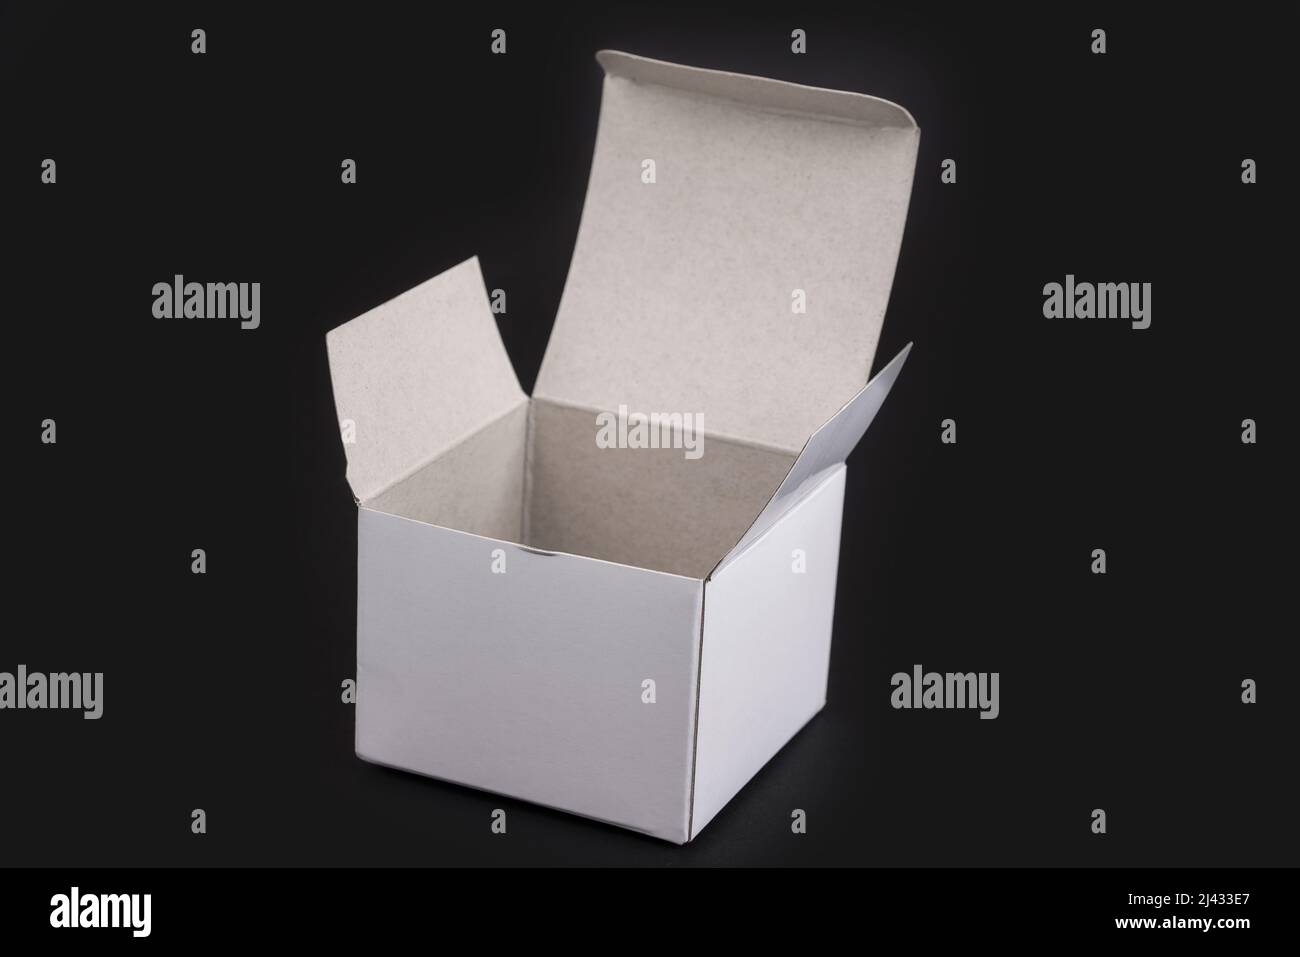 Empty white paper box on a black background Stock Photo